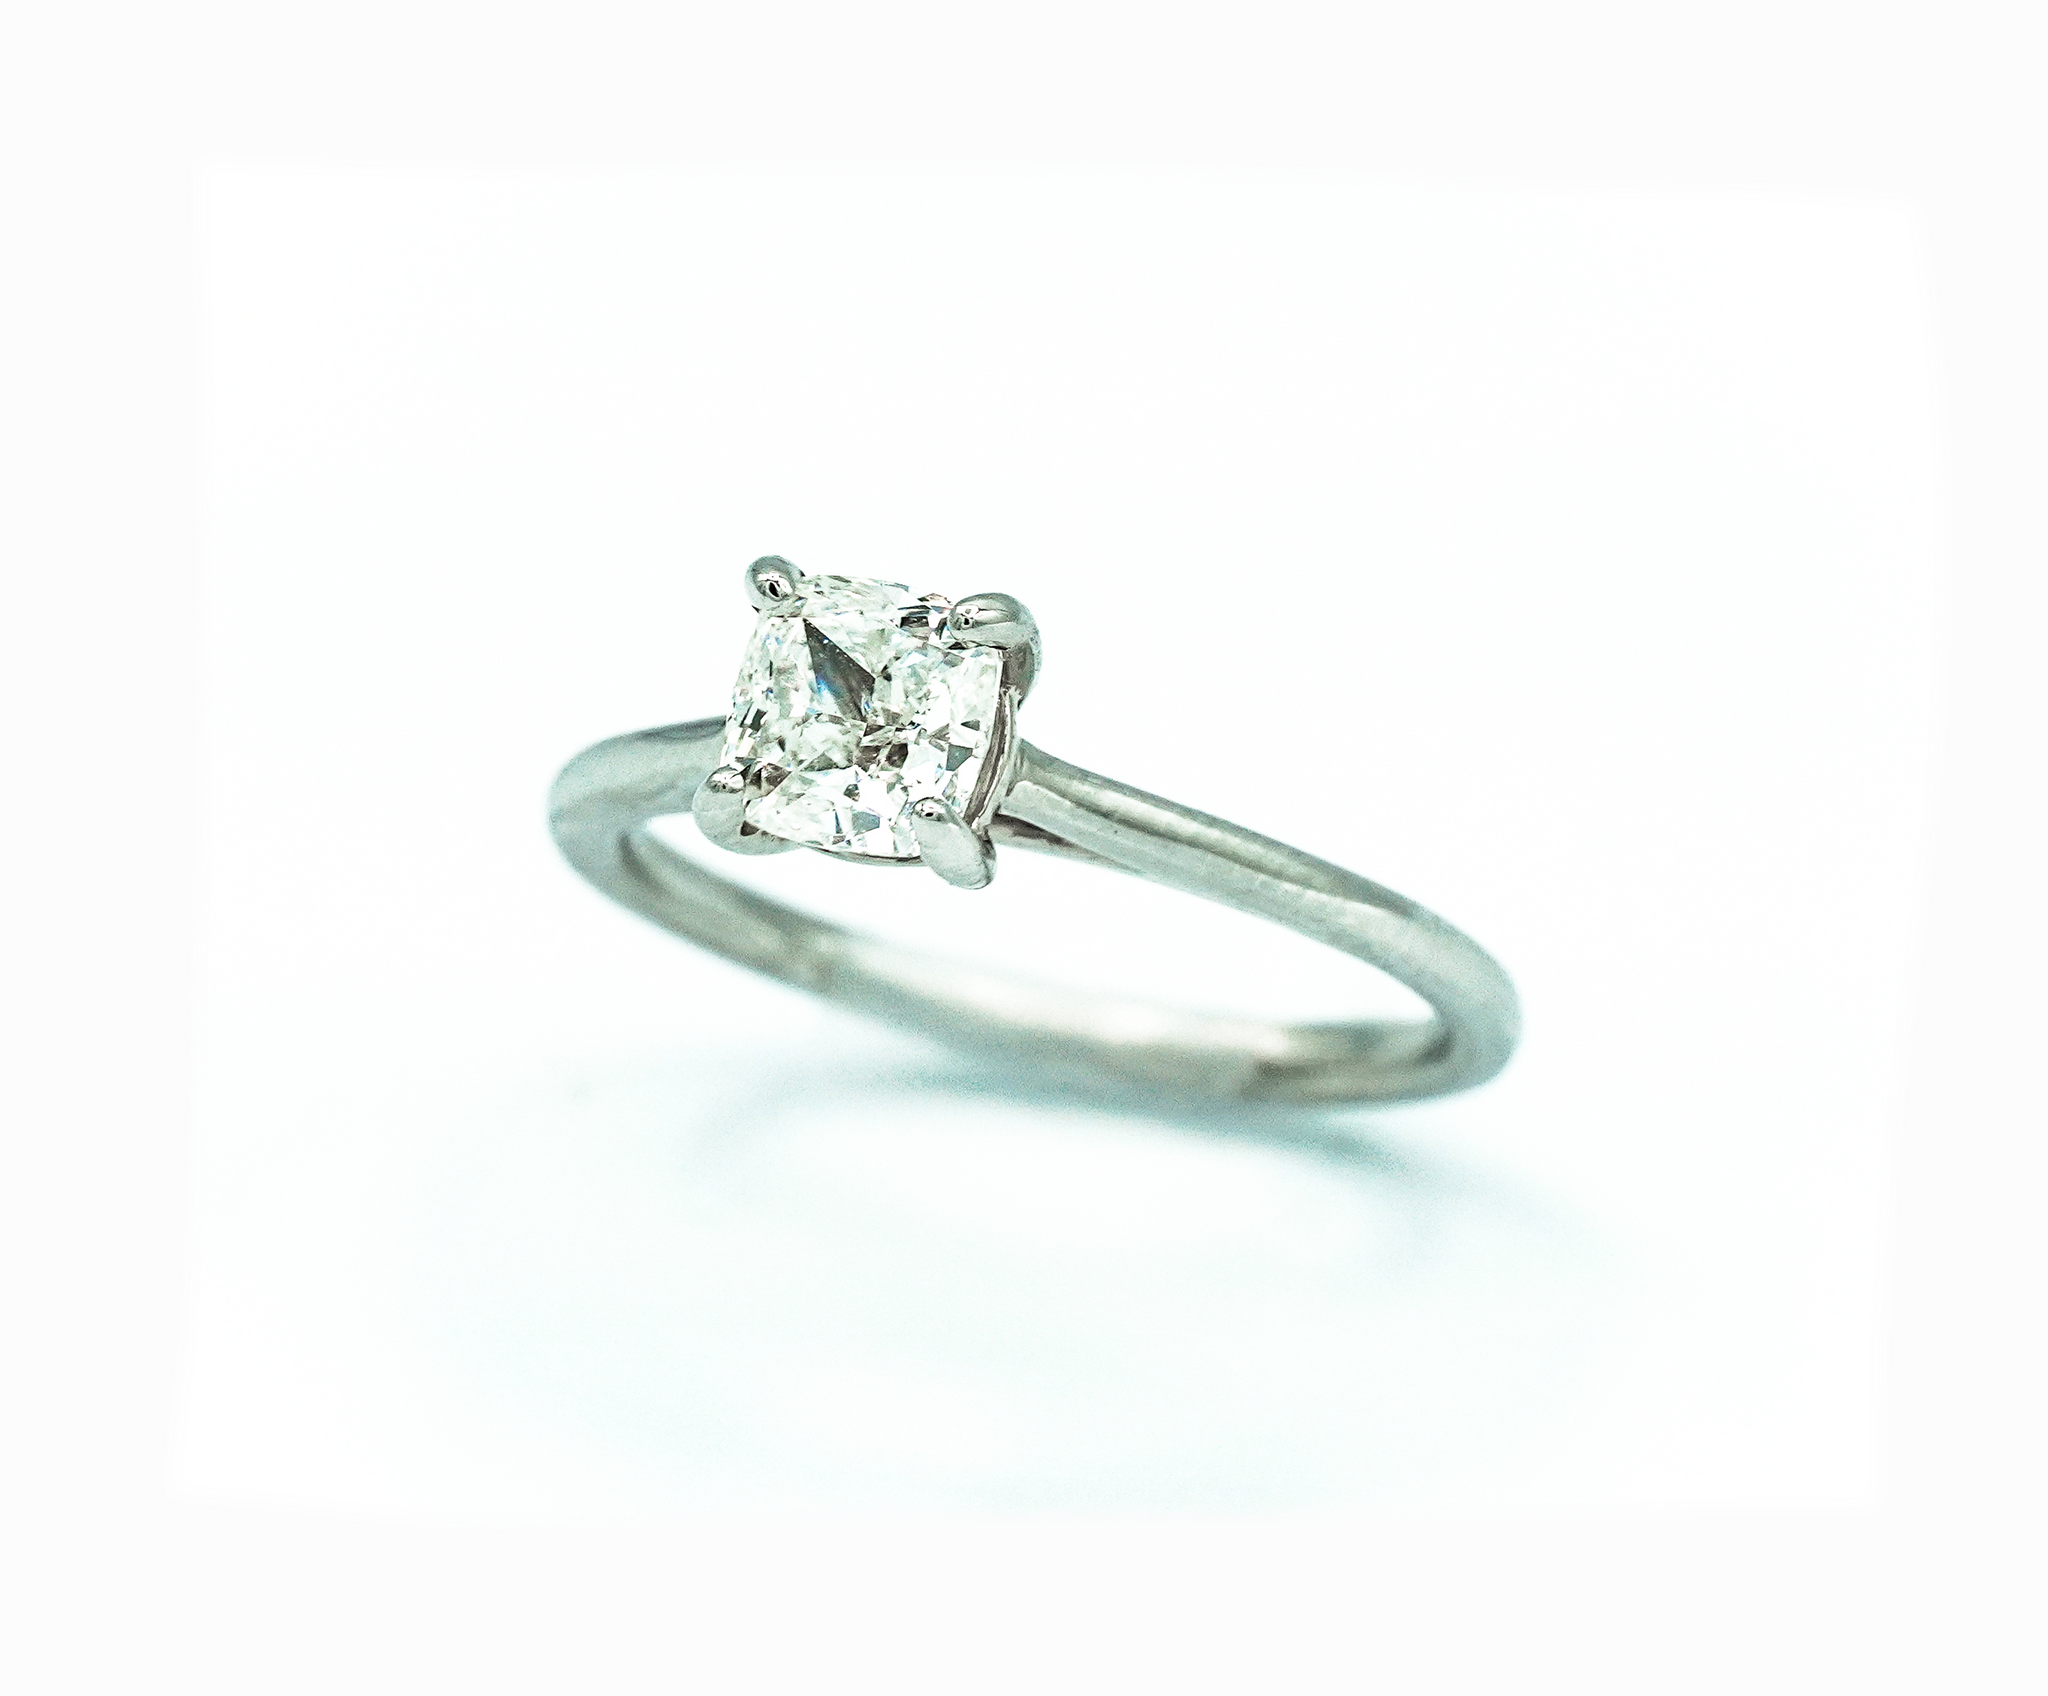 Montalvo Diamonds - Cushion Modified Brilliant Cut Solitaire Ring in 14kt White Gold